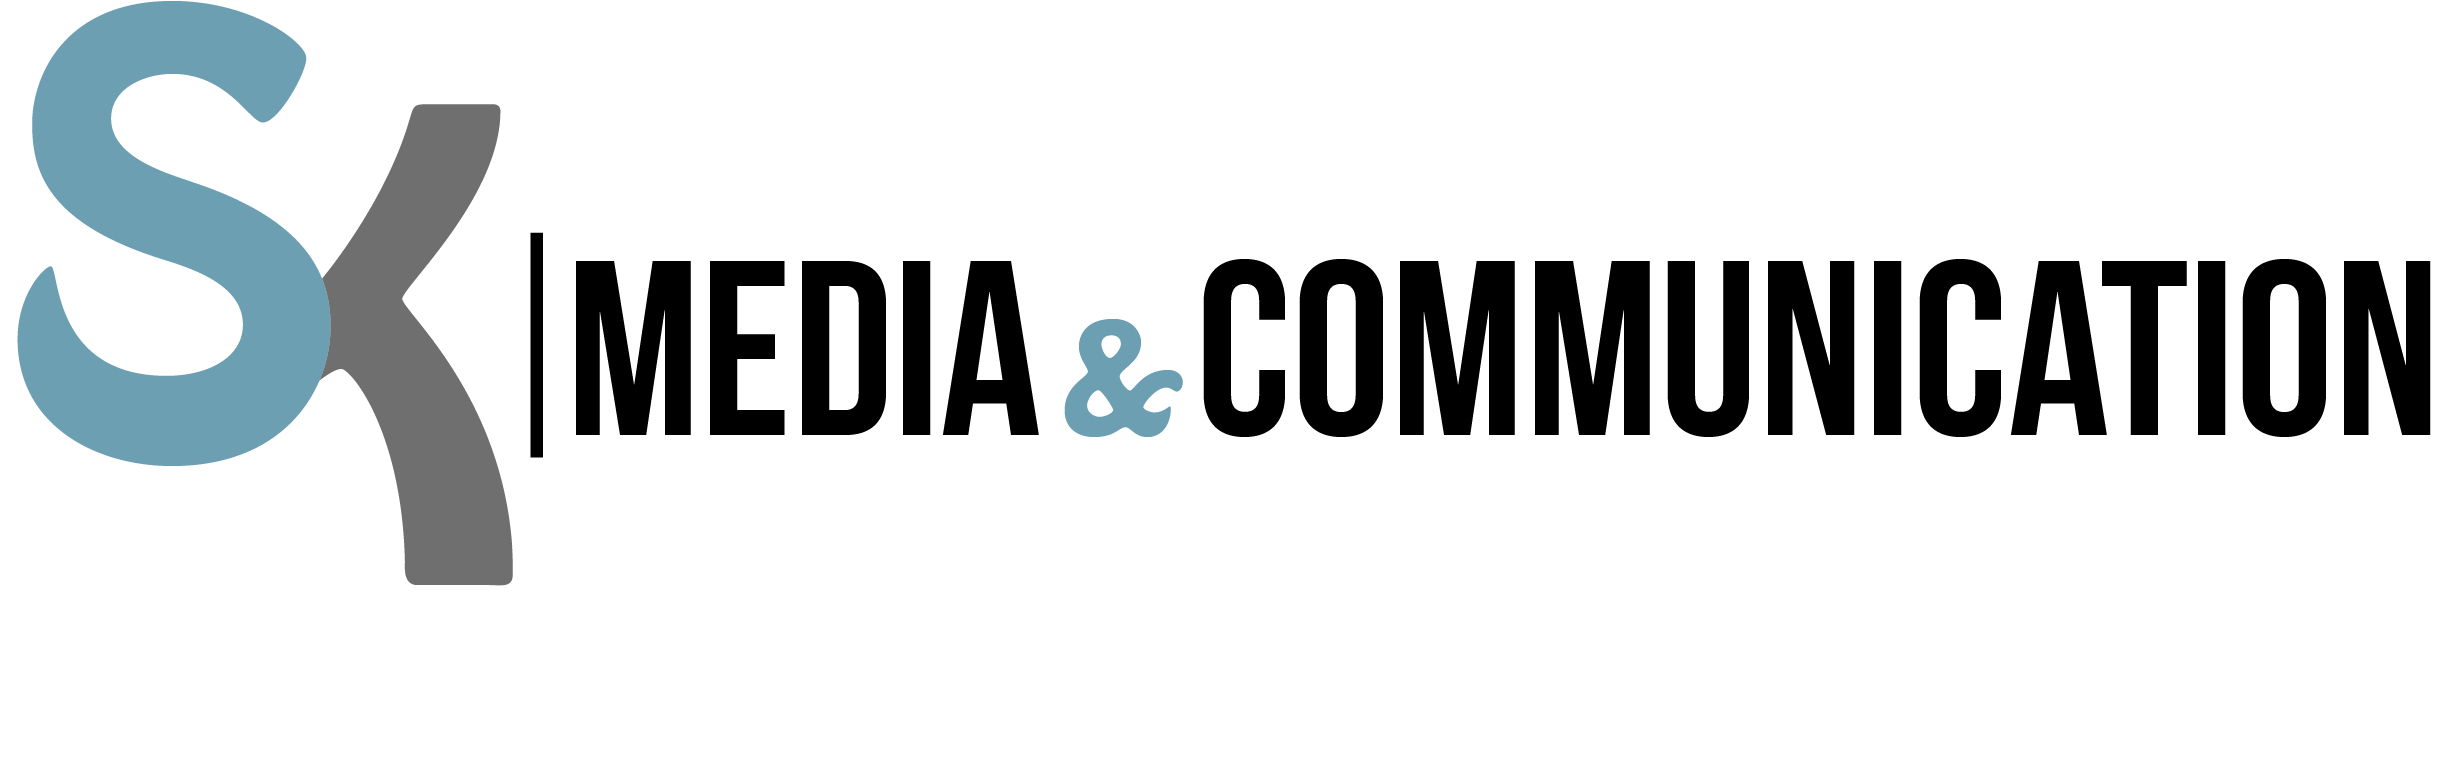 SK Media & Communication logo